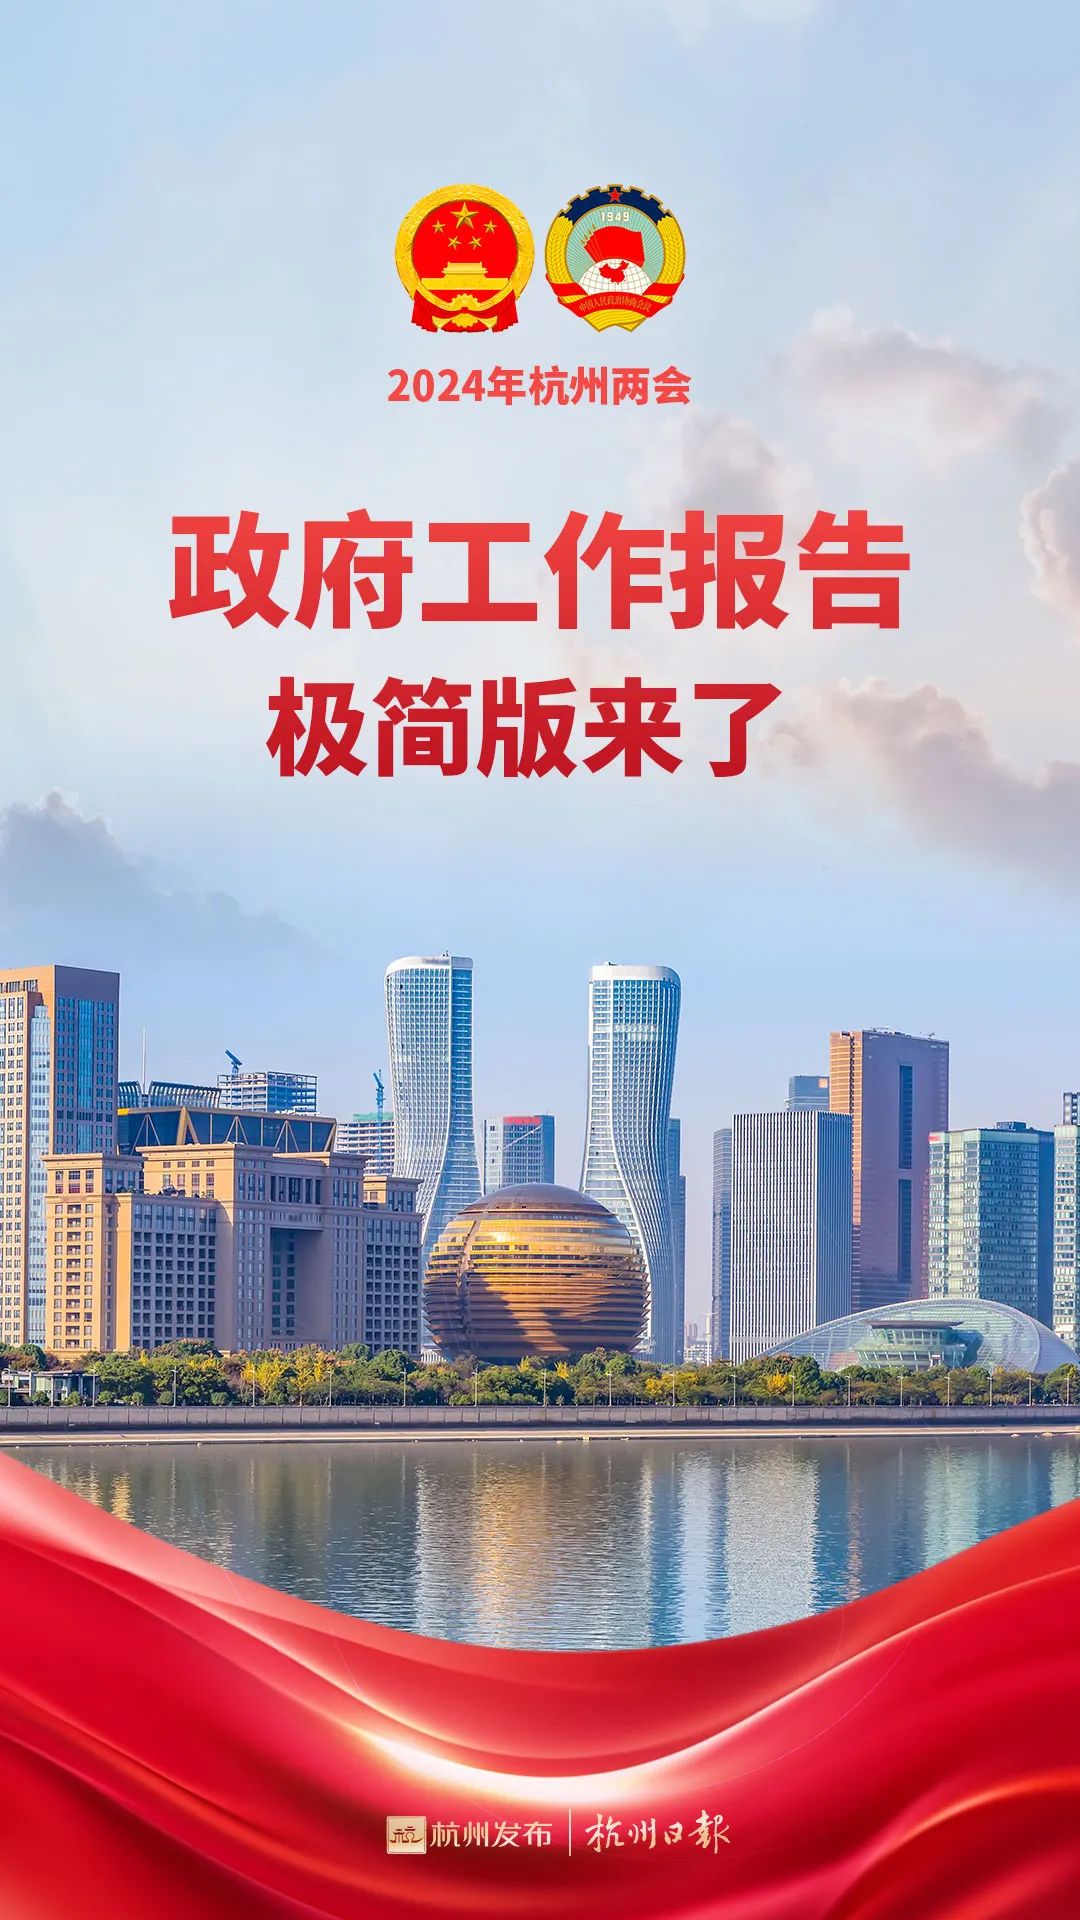 2024年杭州政府工作报告，极简版来了！